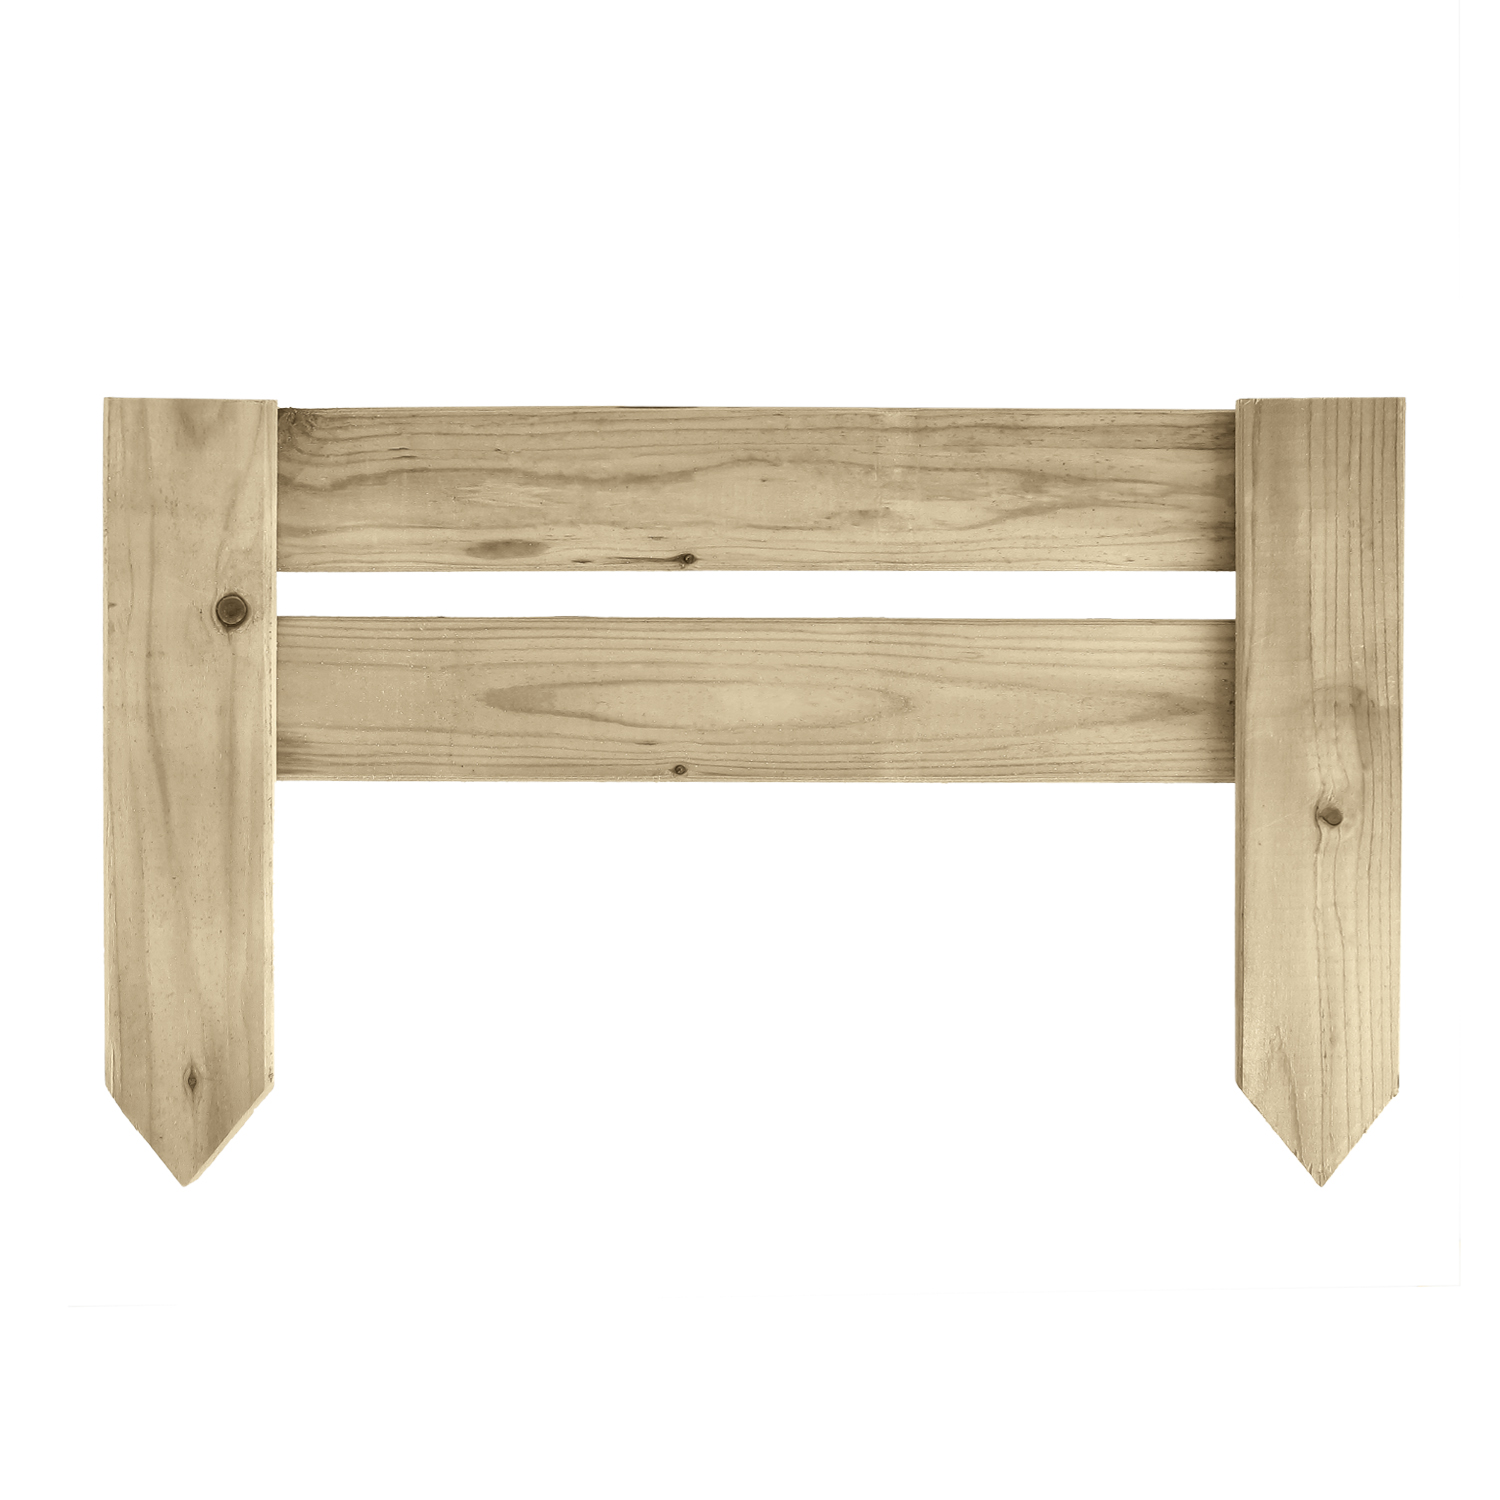 Bordura madera 2,8x15/30 (Alt.) cm. Longitud 50 cm.. Bordo madera, Rollborder madera. MaderaTratada,